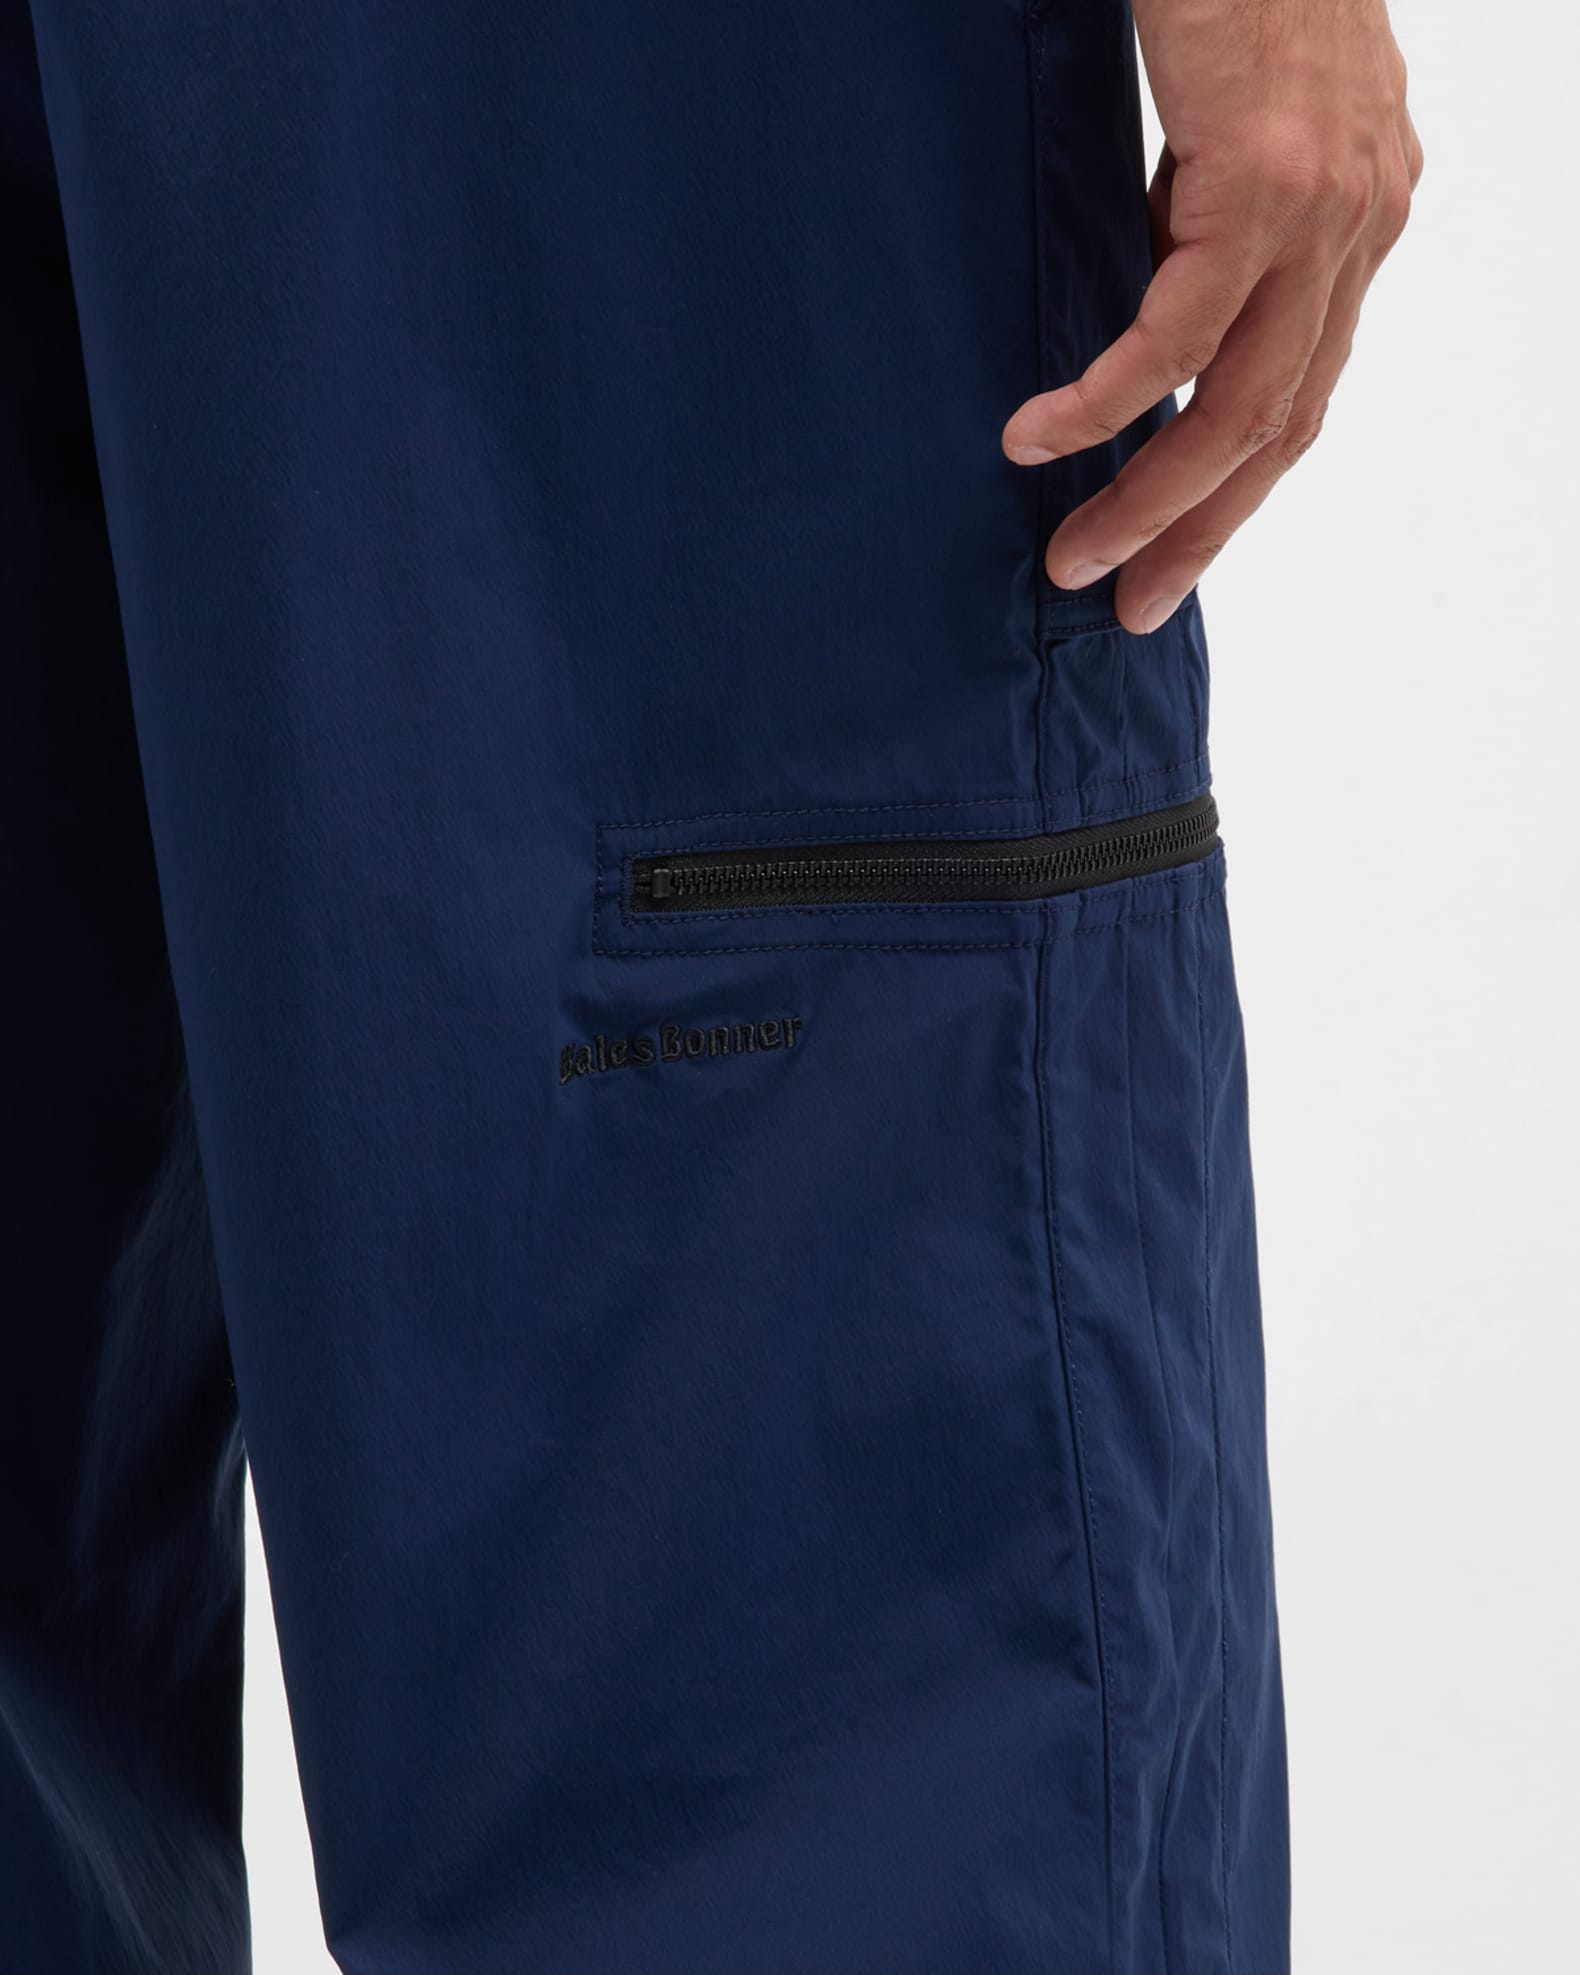 Adidas x Wales Bonner Men's Logo Cargo Tapered Pants | Neiman Marcus